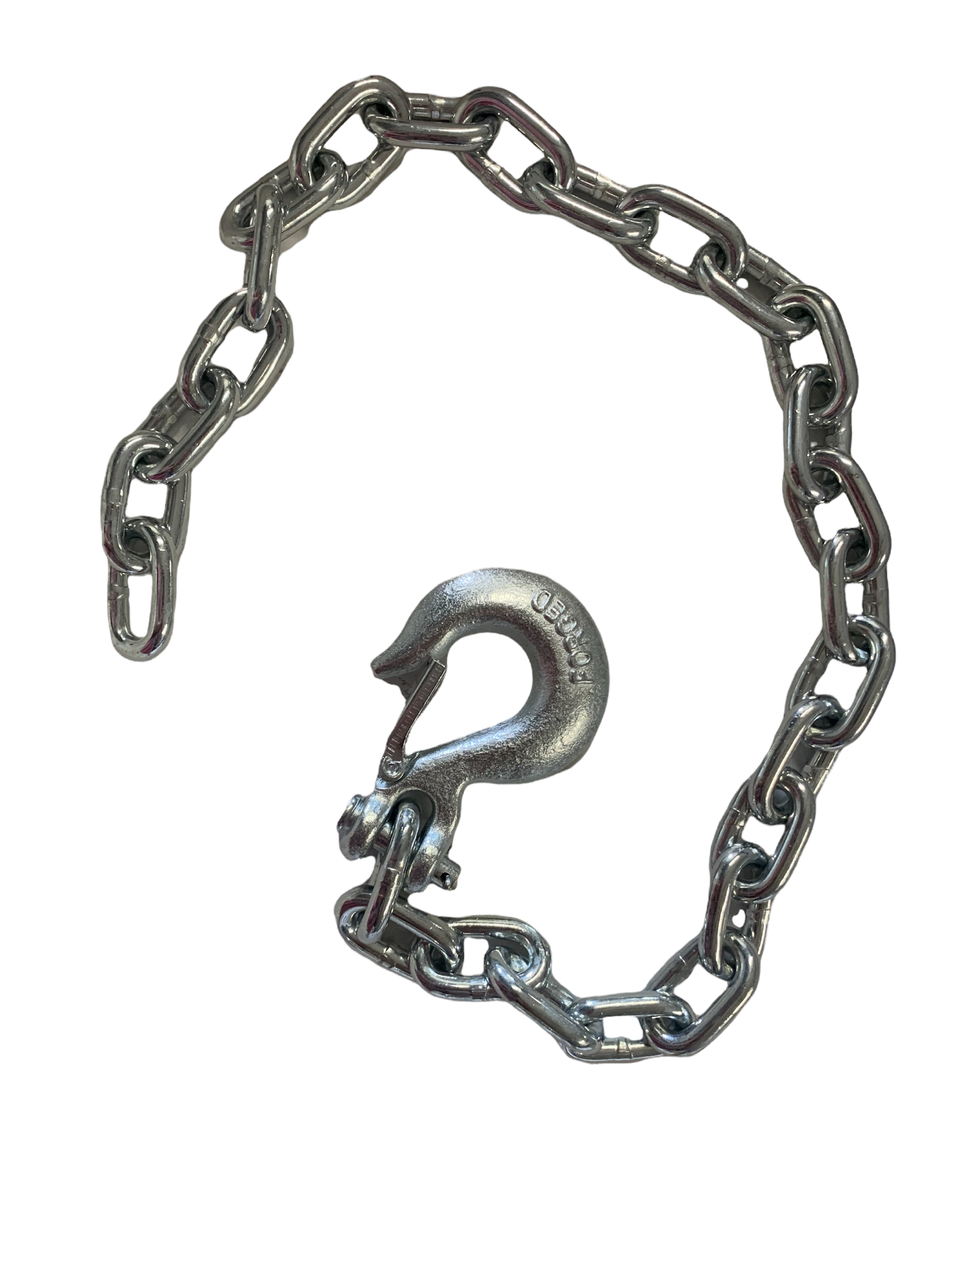 Gooseneck Safety Chain 5/16 x 35 w/ Clevis Slip Latch Hook 11.7k Cap